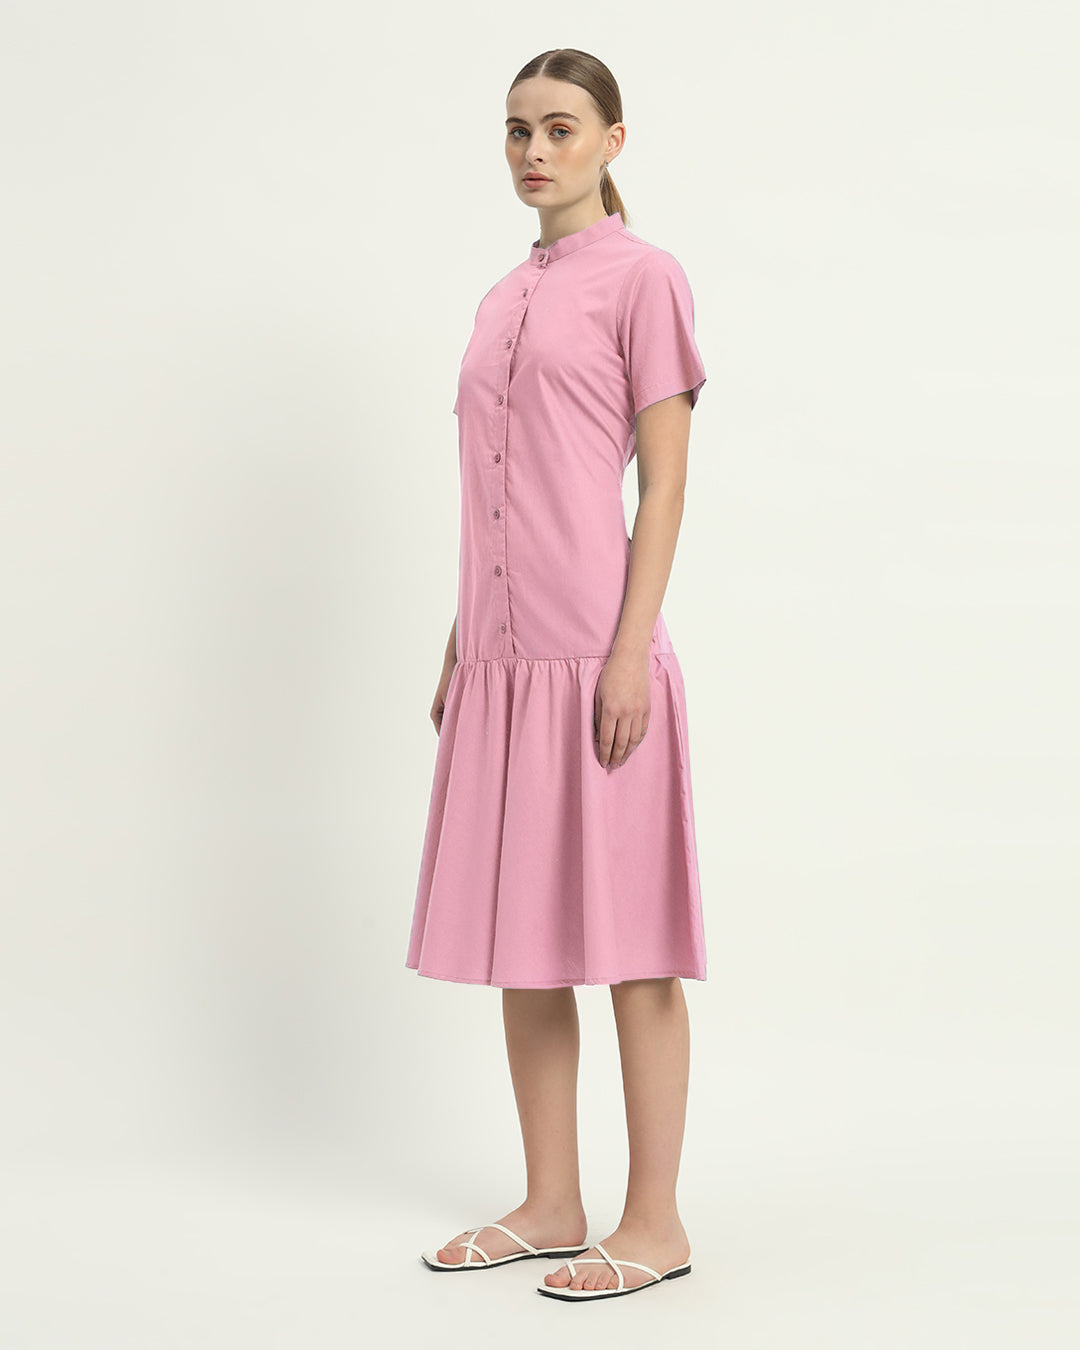 The Fondant Pink Melrose Cotton Dress